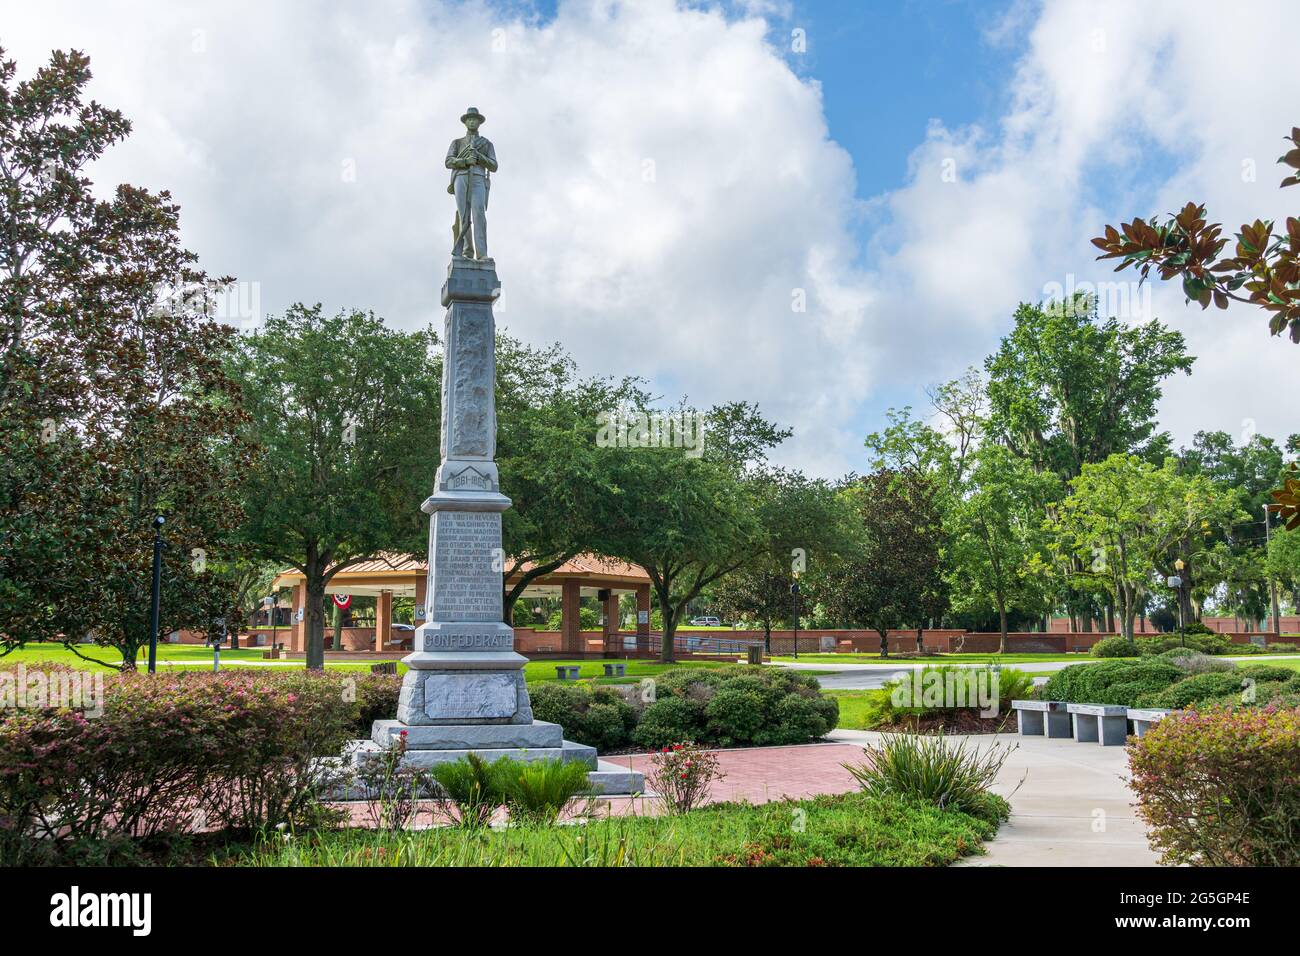 Monument dedicated to Confederate Civil War troops at Ocala Marion County Veteran's Memorial Park - Ocala, Florida, USA Stock Photo